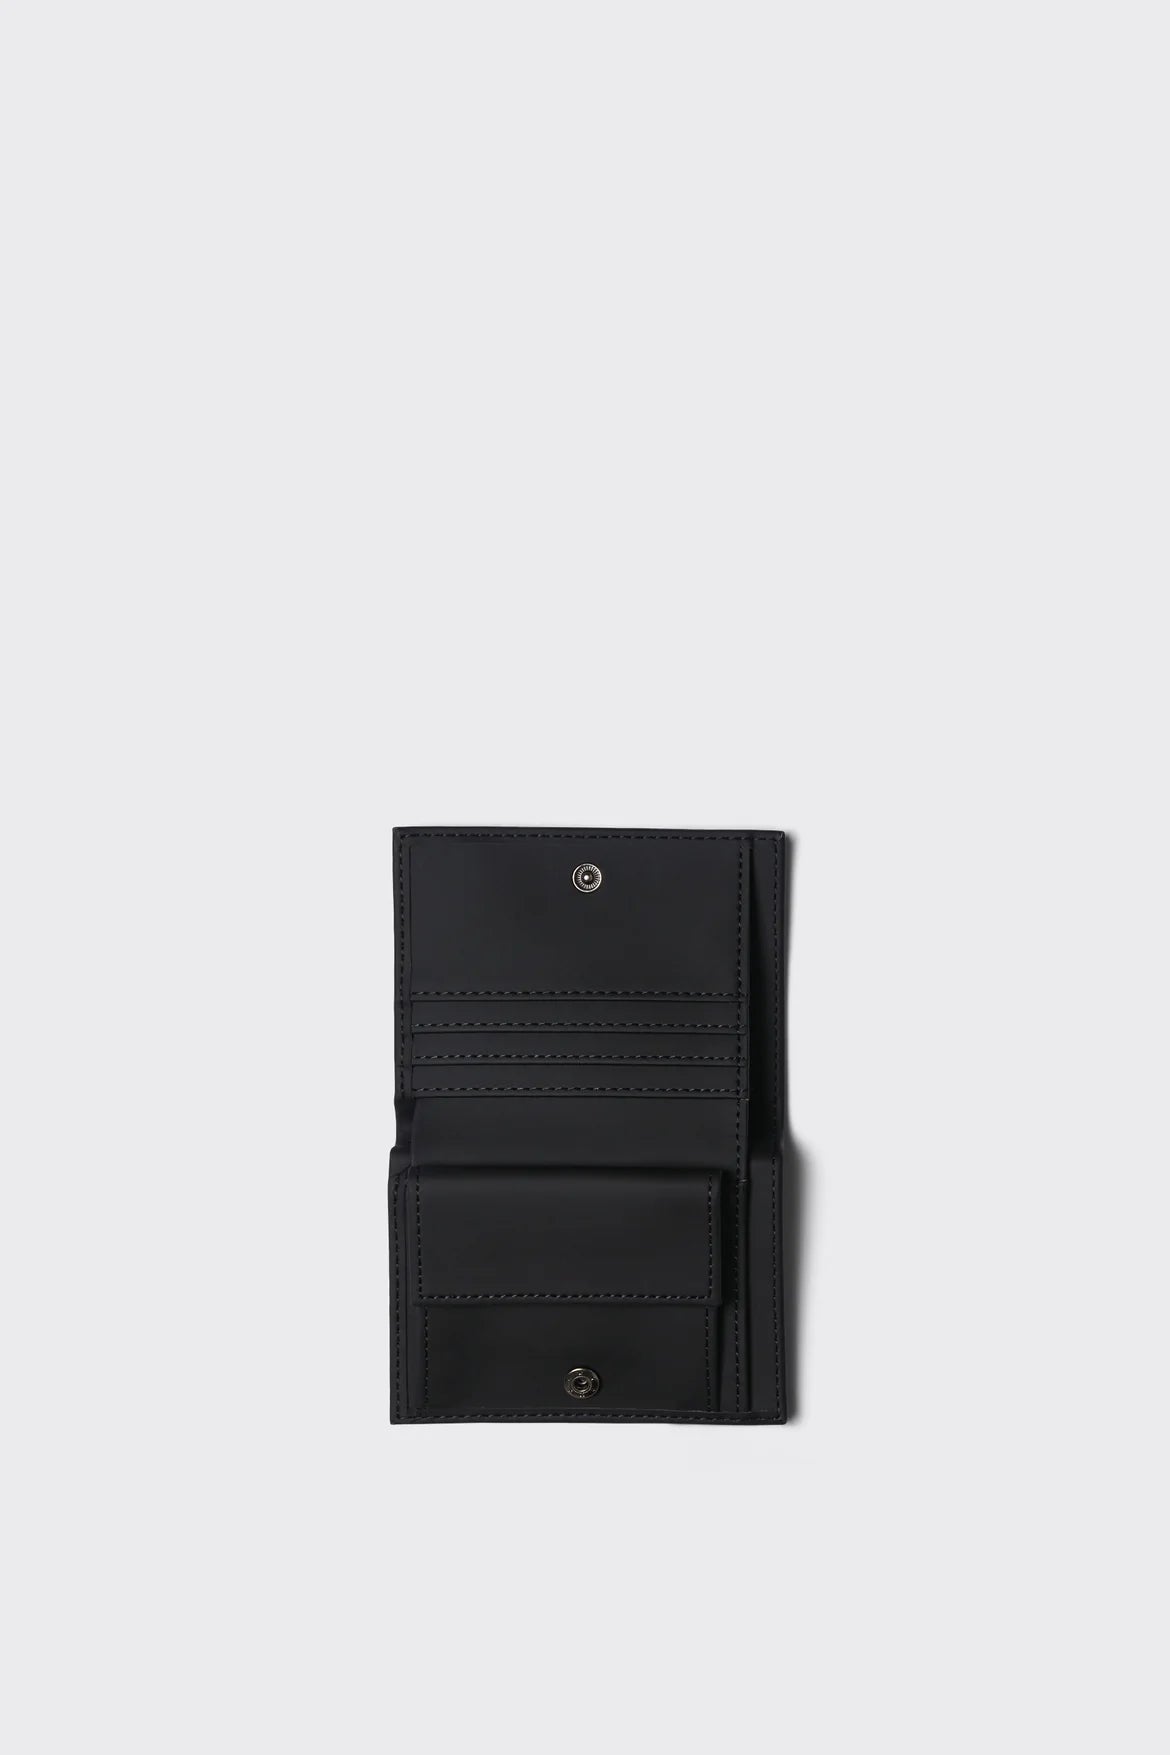 Folded Wallet Black + Wood - Rains